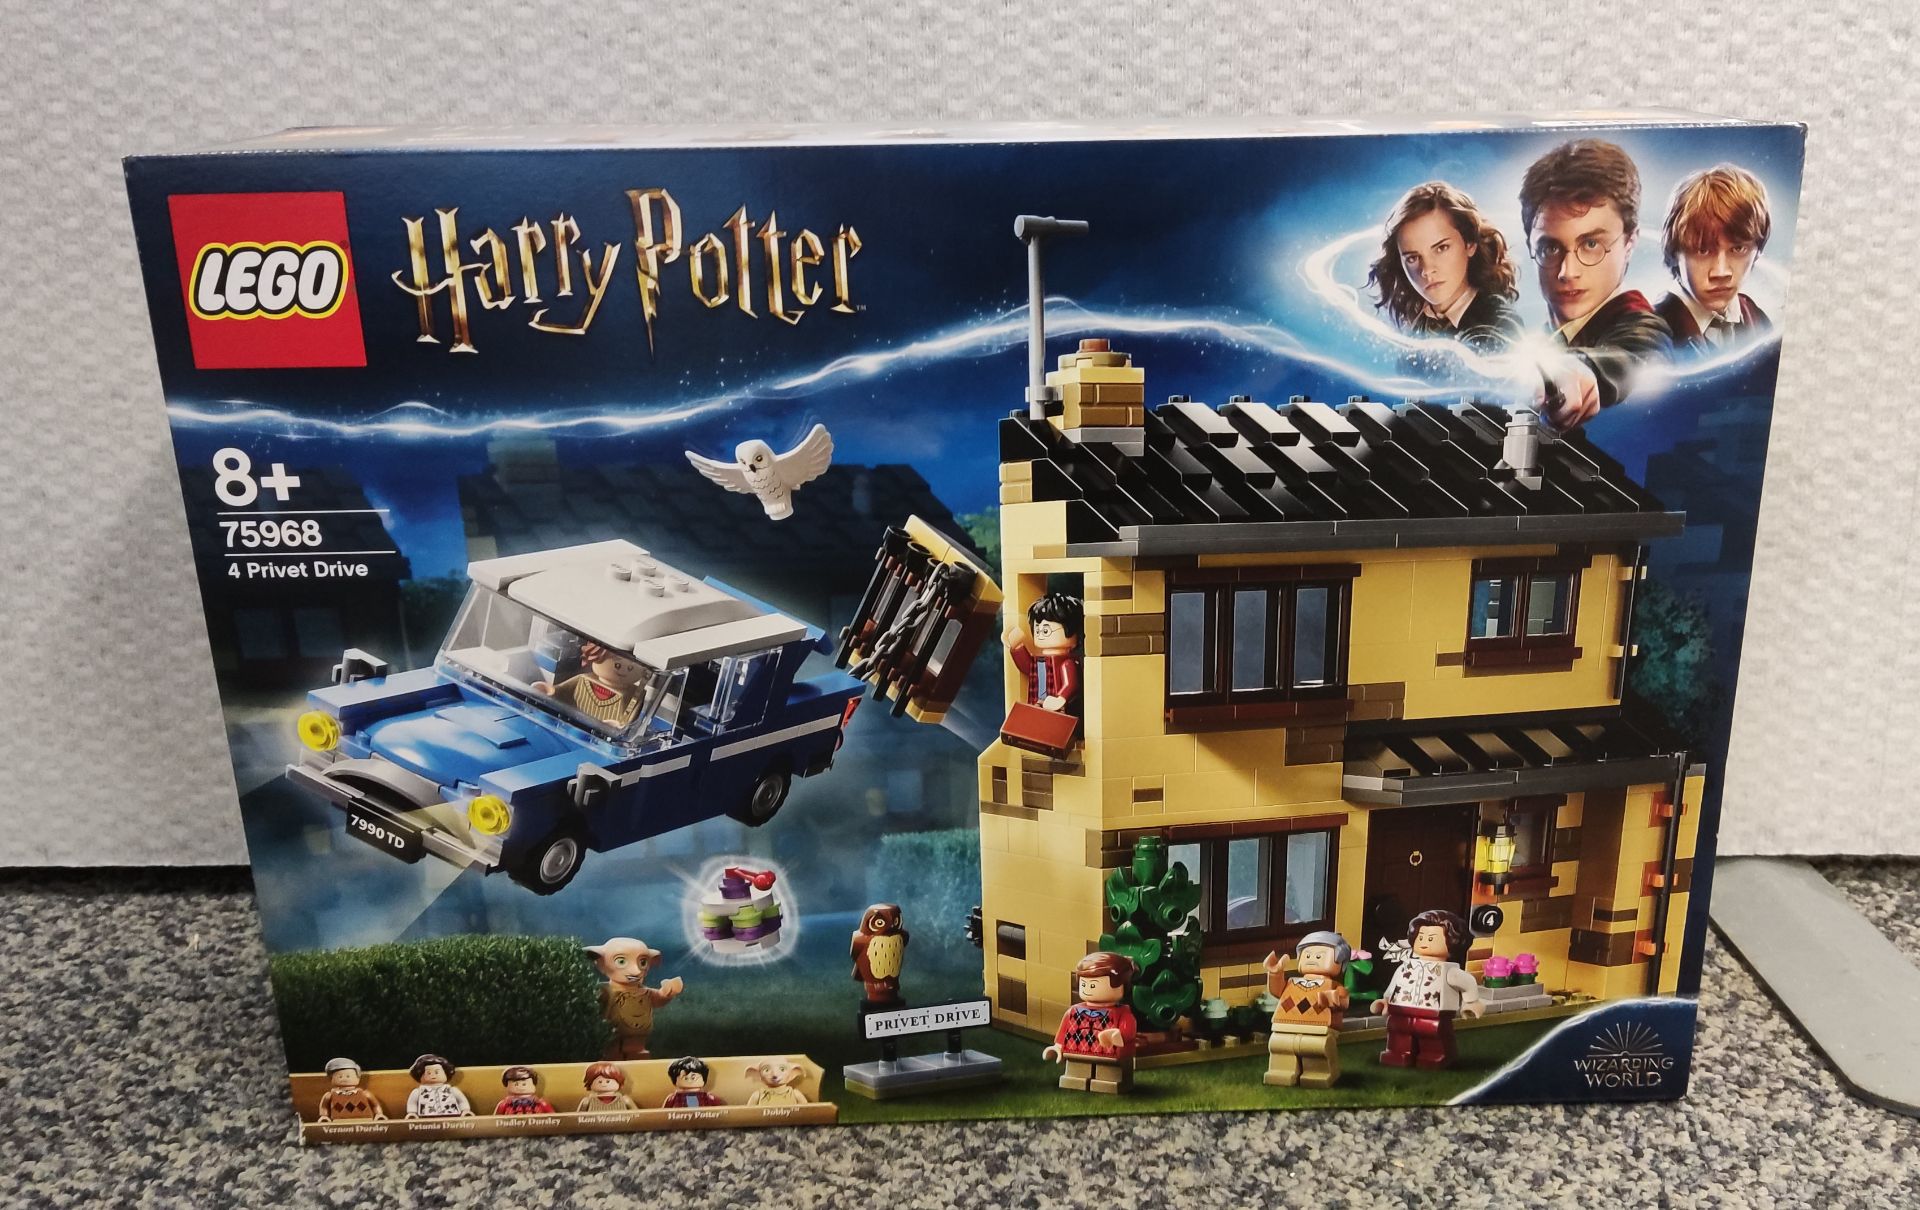 1 x Lego Harry Potter 4 Privet Drive - Set # 75968 - New/Boxed - Image 2 of 8